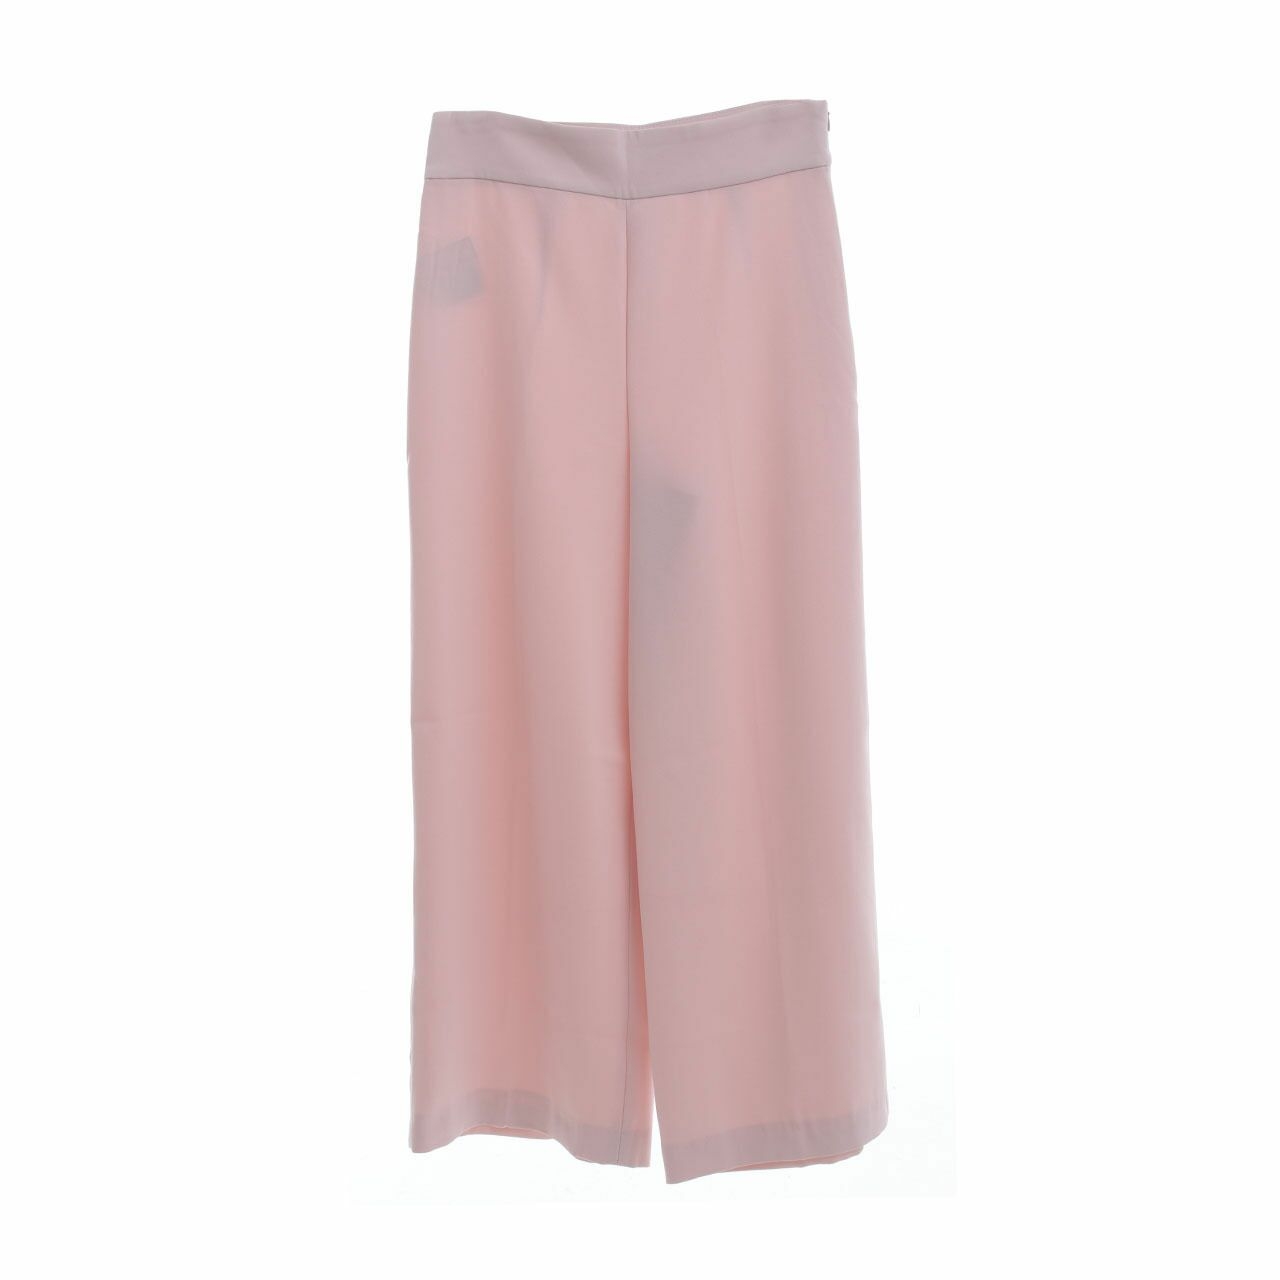 Zara Pink Culottes Long Pants